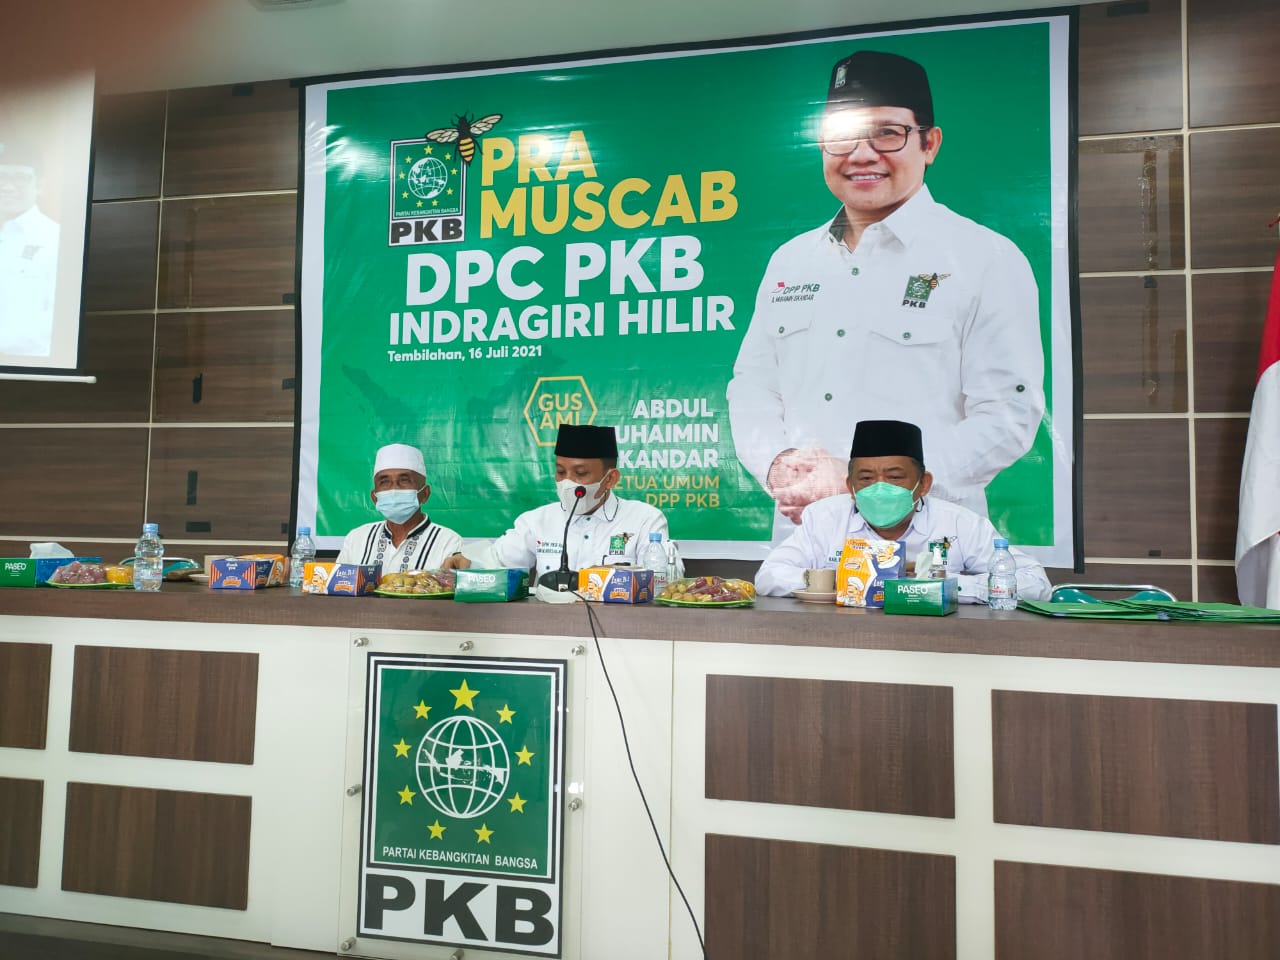 DPC PKB Inhil Gelar Pra Muscab Ke-5. Hasilkan Satu Nama Kandidat Ketua